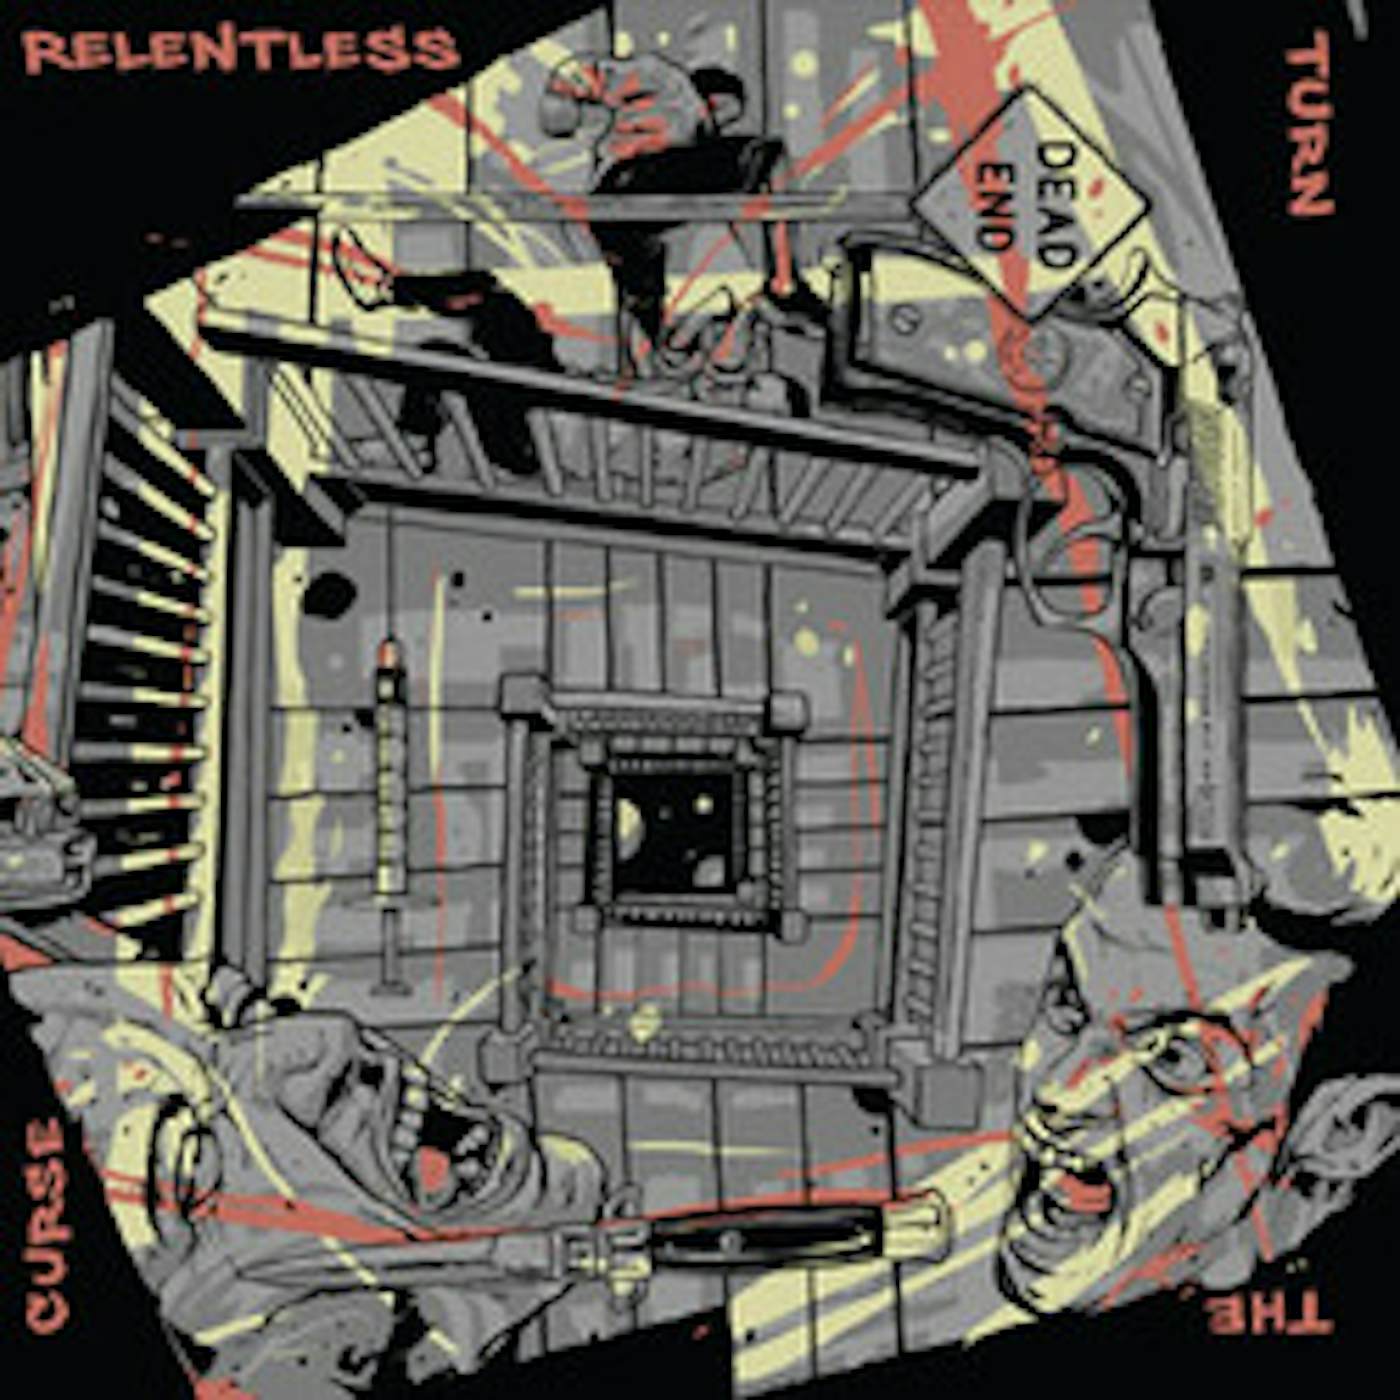 Relentless Turn the Curse Vinyl Record